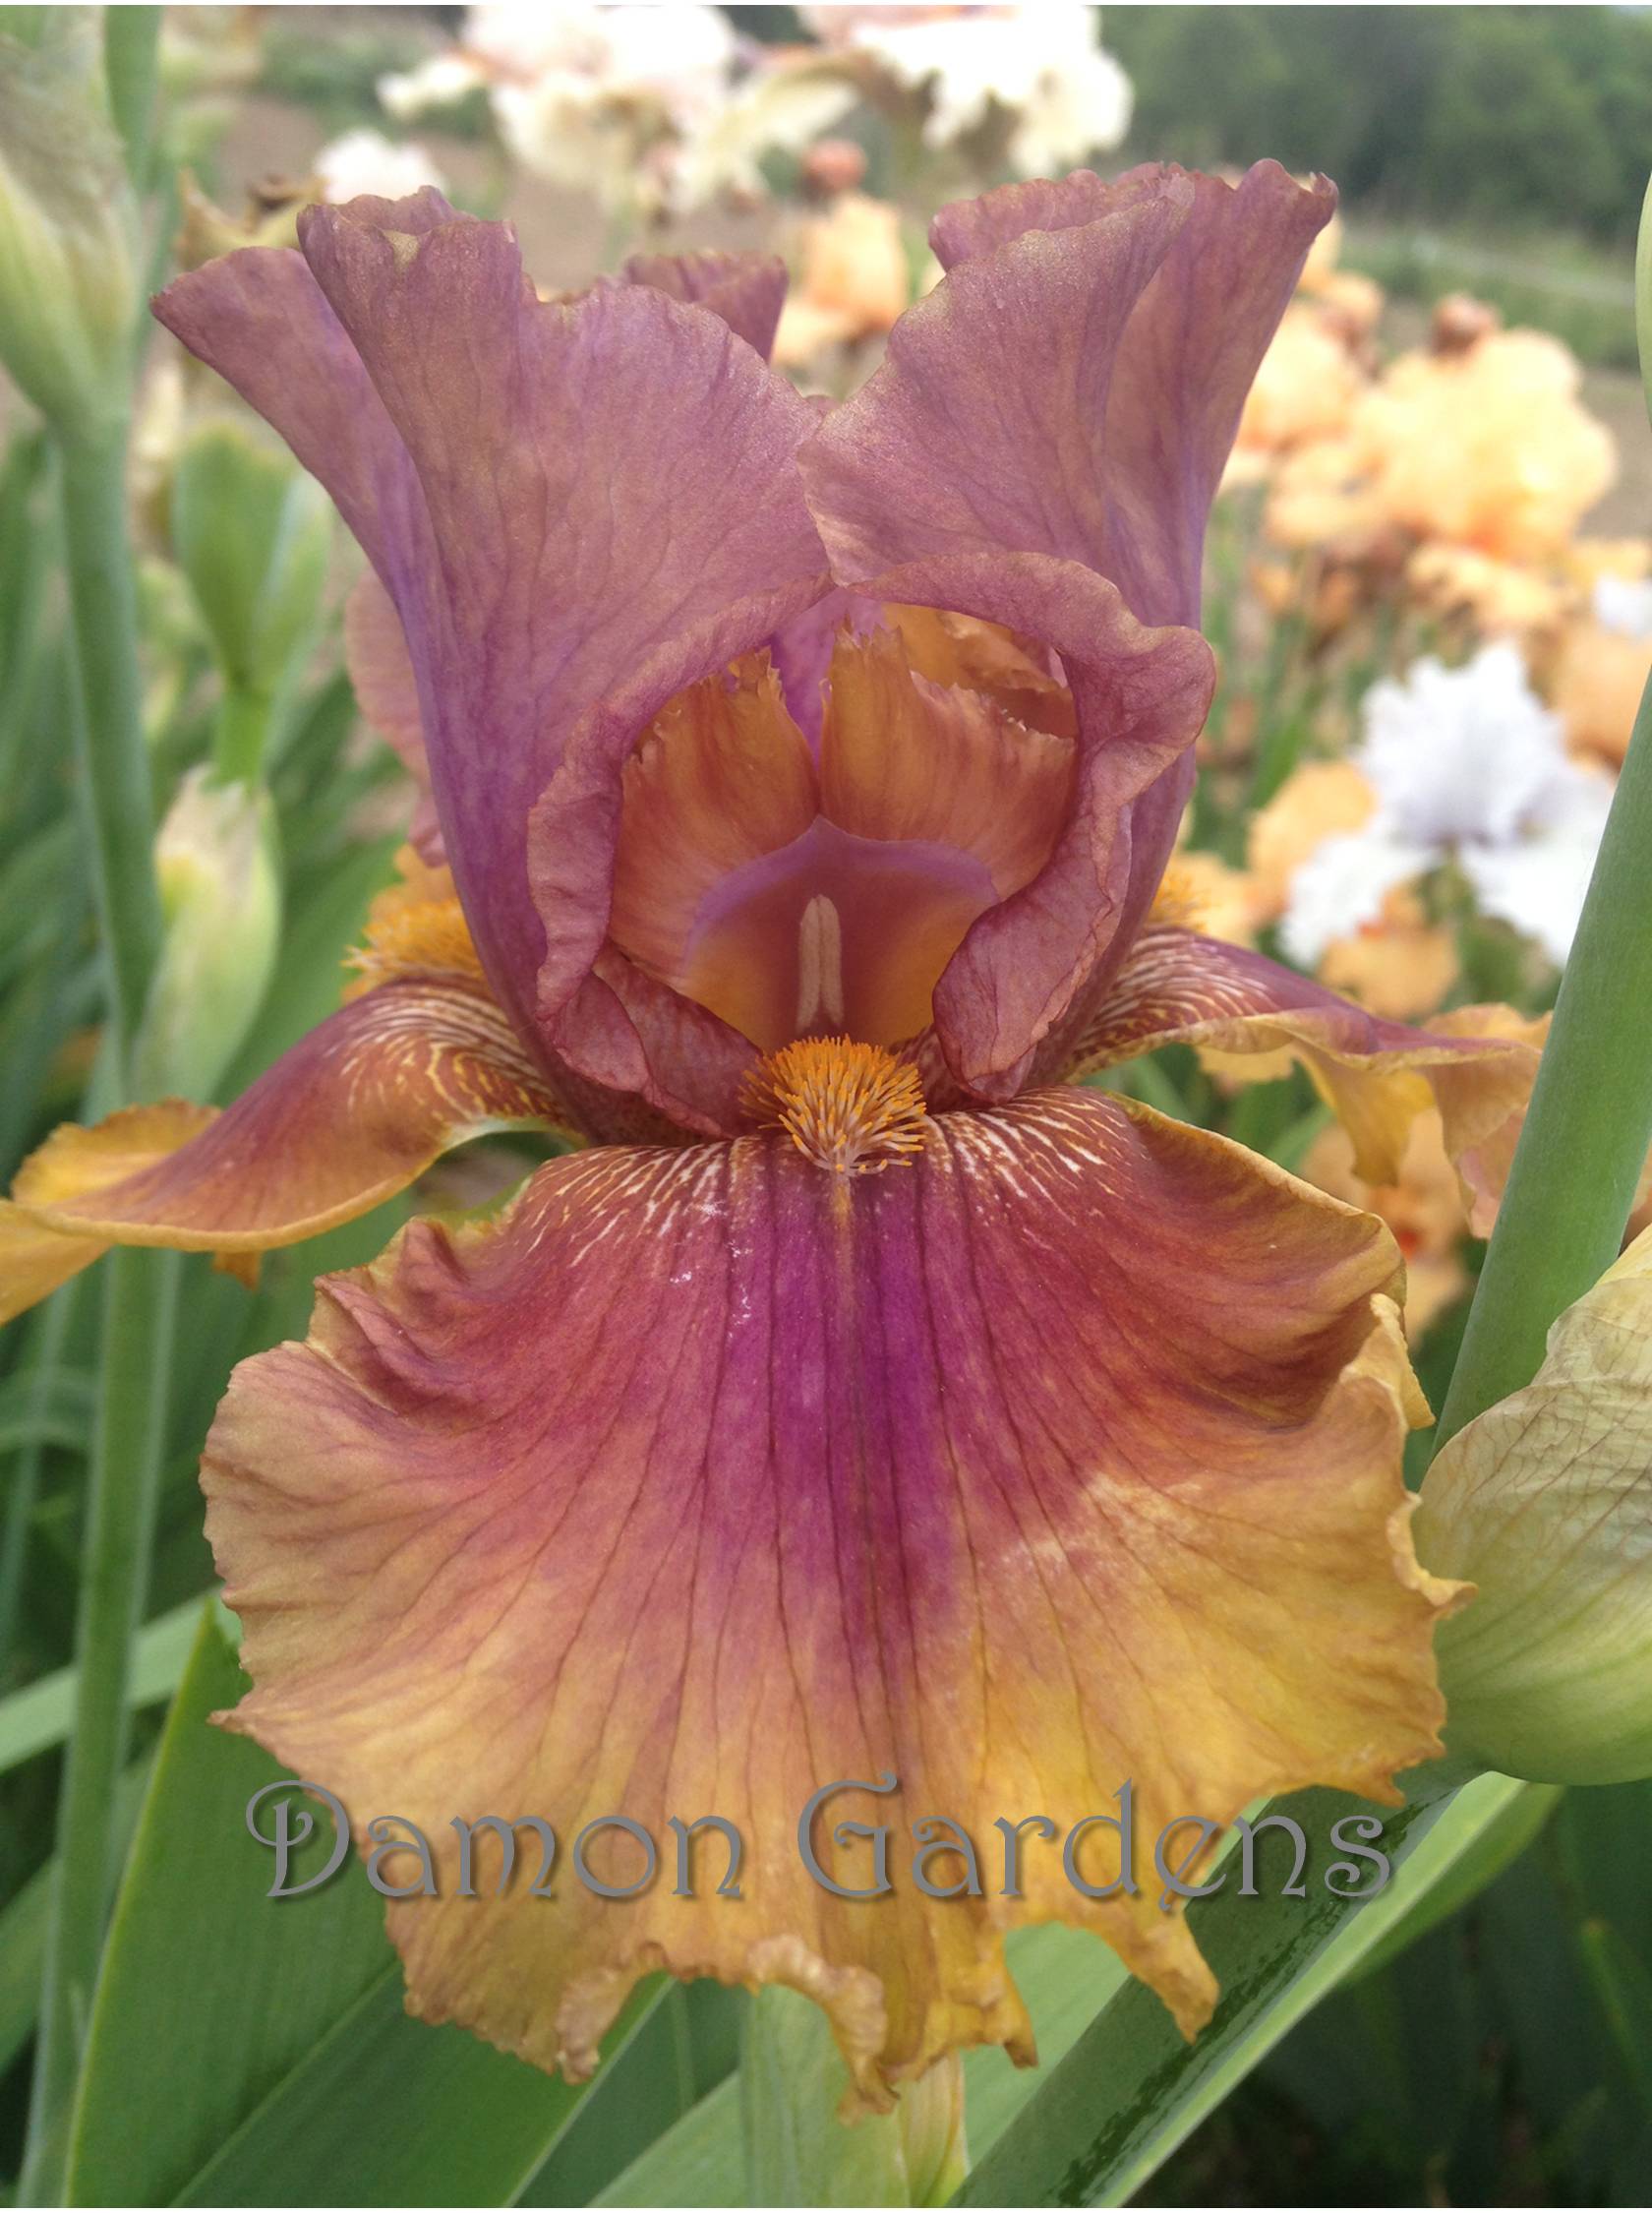 Iris Harvest Maiden